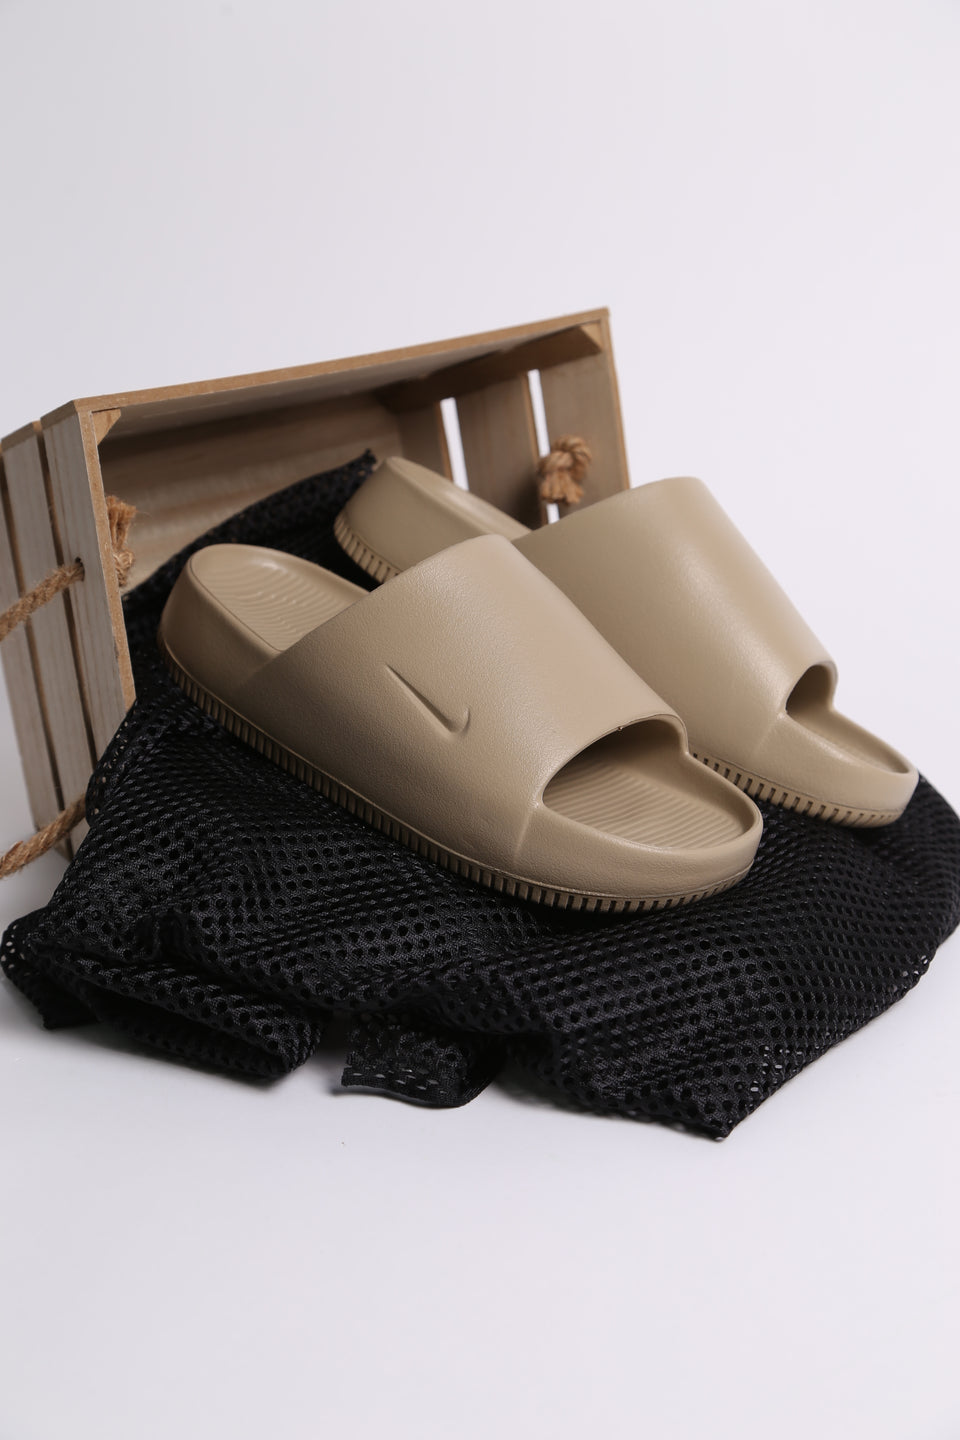 Nike Calm Slide - Tan